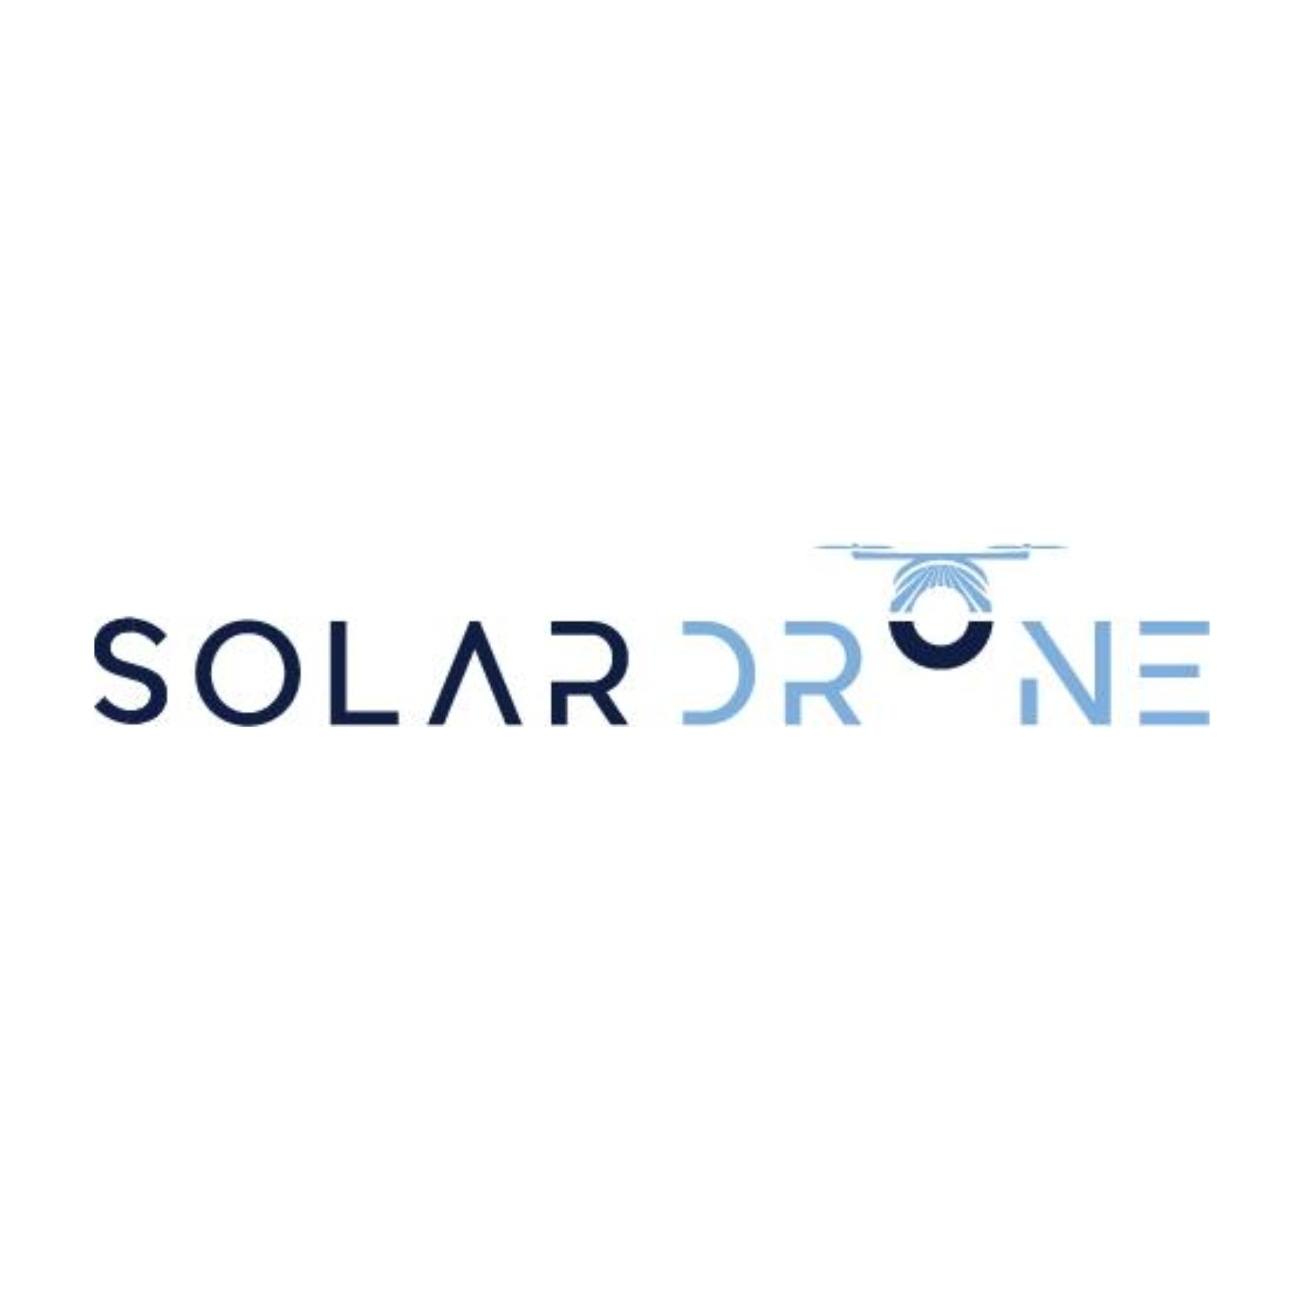 Solar Drone logo